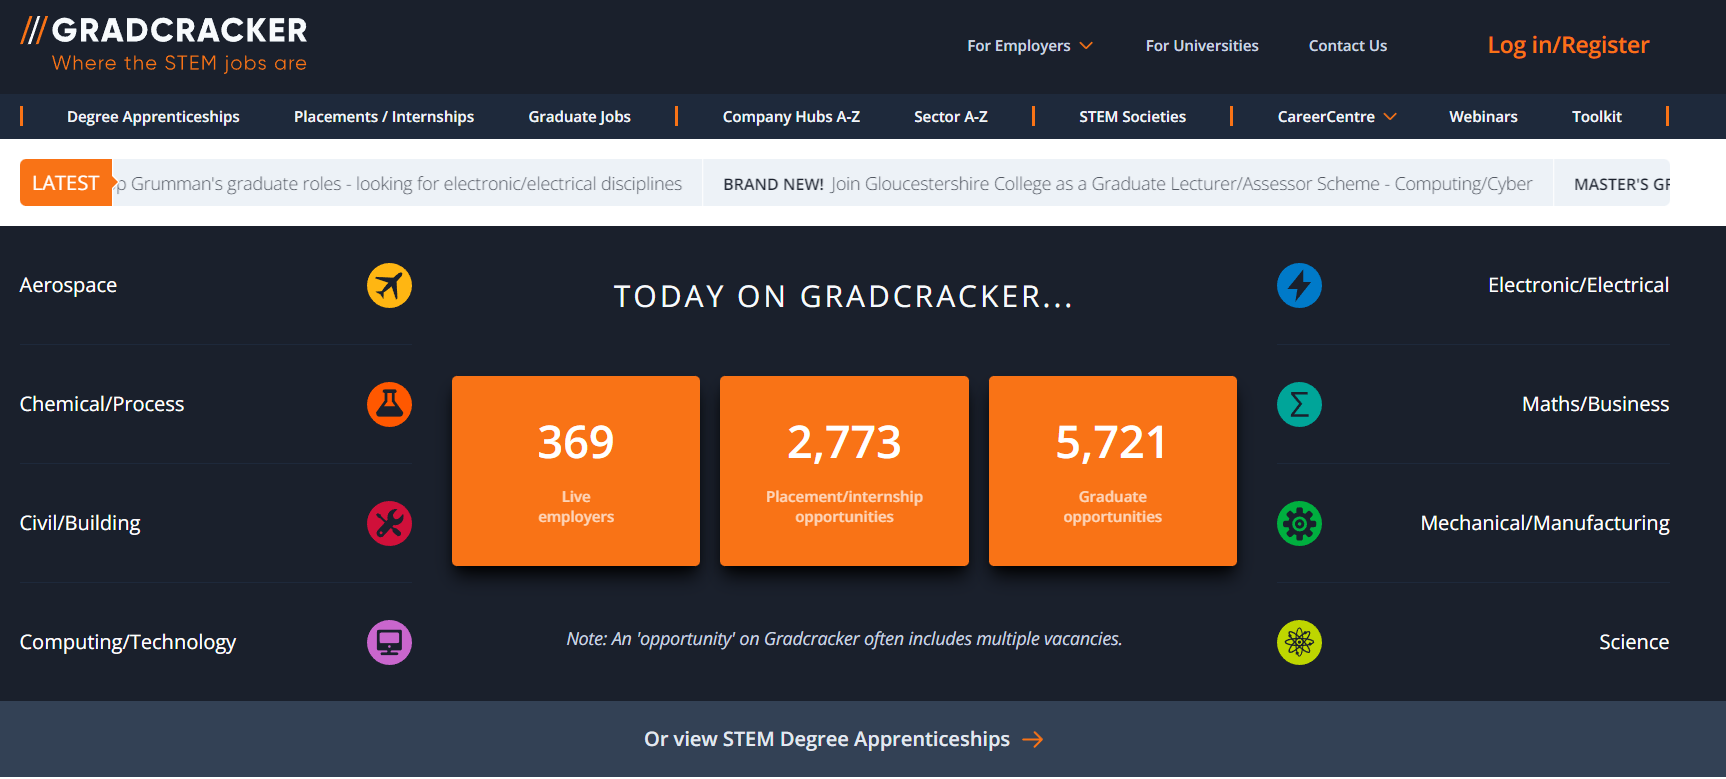 Gradcracker Job Site Screenshot